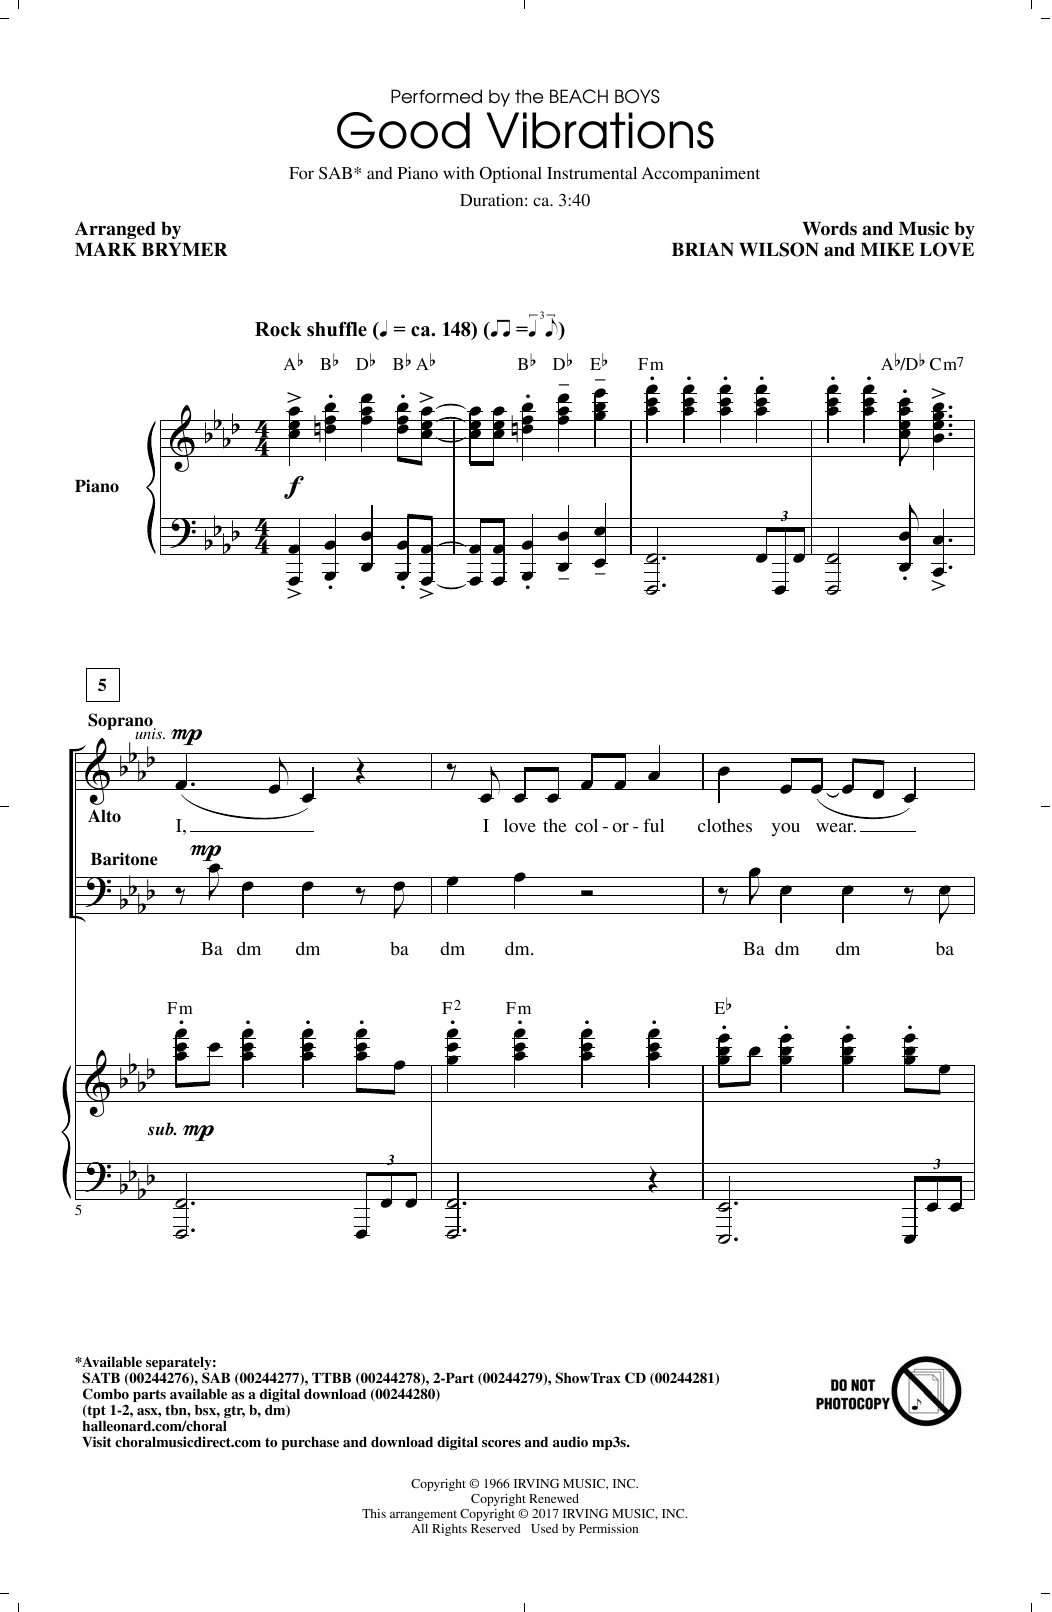 Mark Brymer Good Vibrations Sheet Music Notes & Chords for SAB - Download or Print PDF